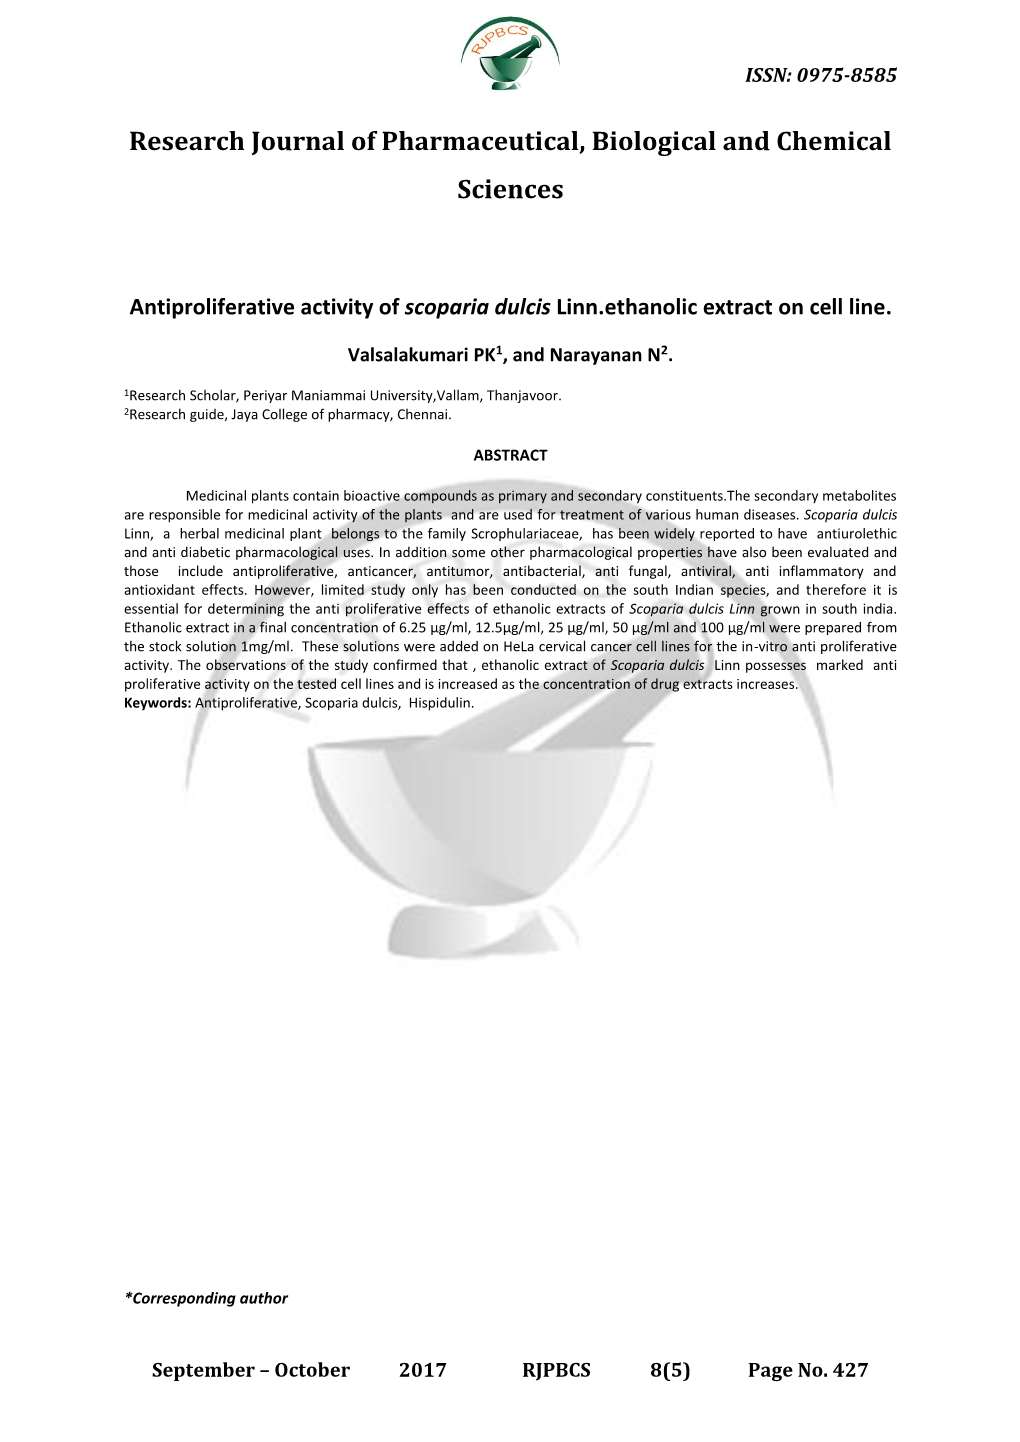 Antiproliferative Activity of Scoparia Dulcis Linn.Ethanolic Extract on Cell Line